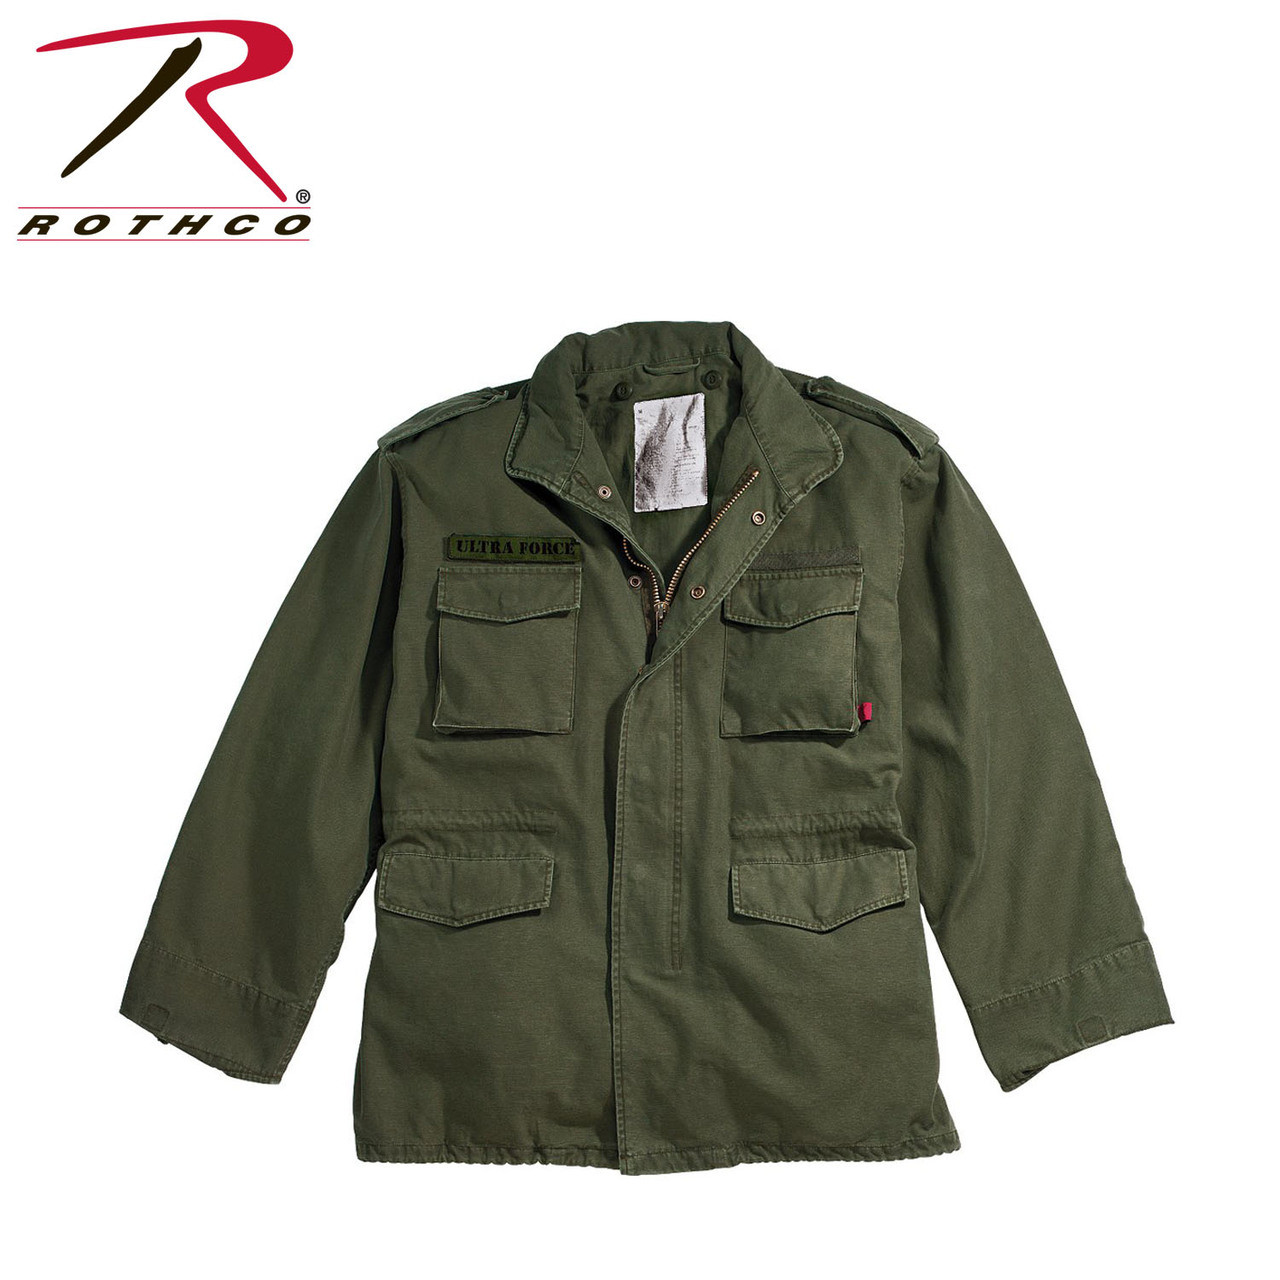 Mens Subdued Urban Digital Camo M-65 Field Jacket Rothco Cotton Coat